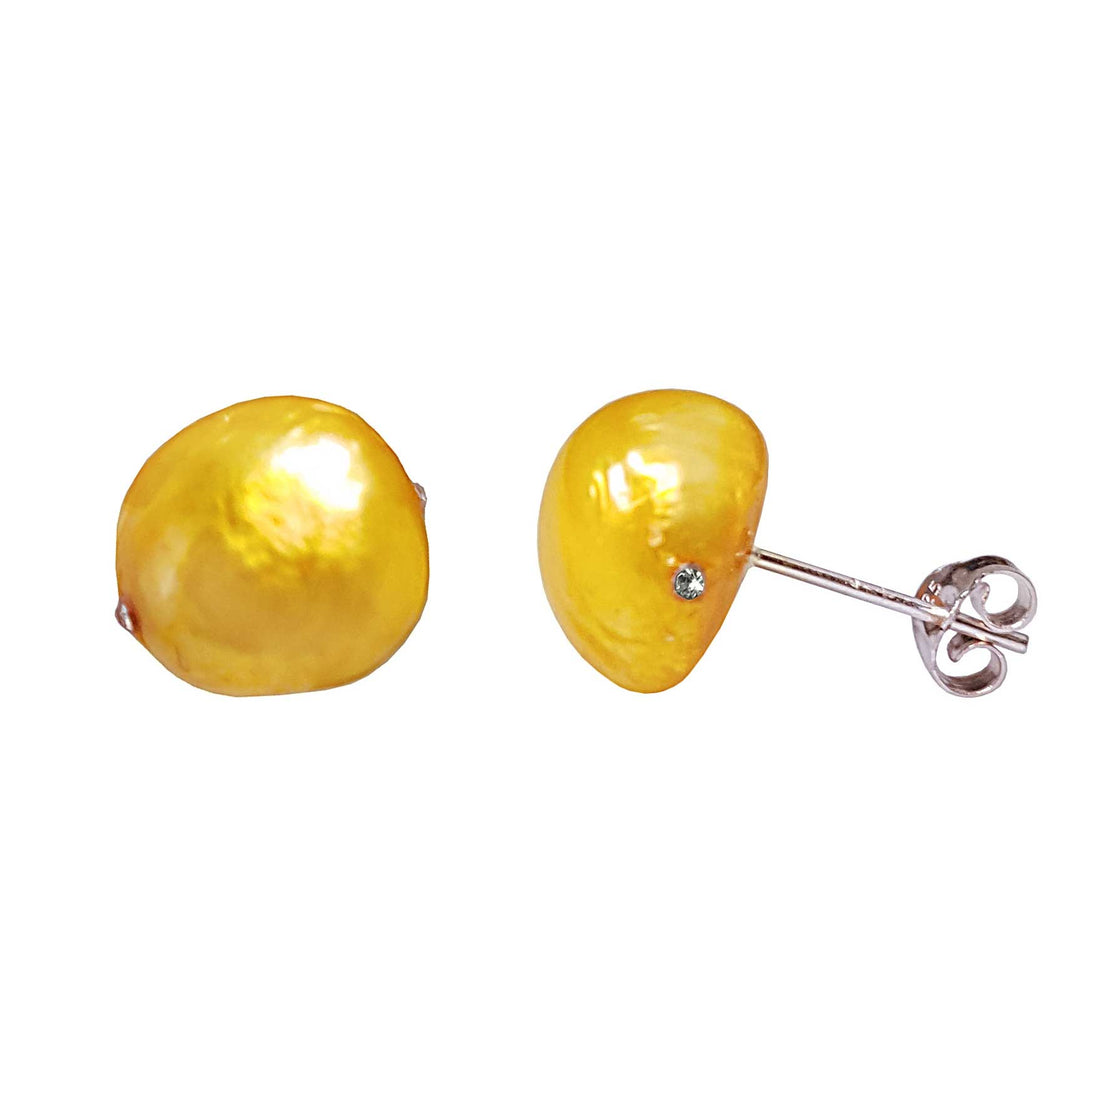 Gele zoetwater parel oorbellen met sterling zilver (925), oorknopje | Little Bling Bold Yellow Pearl